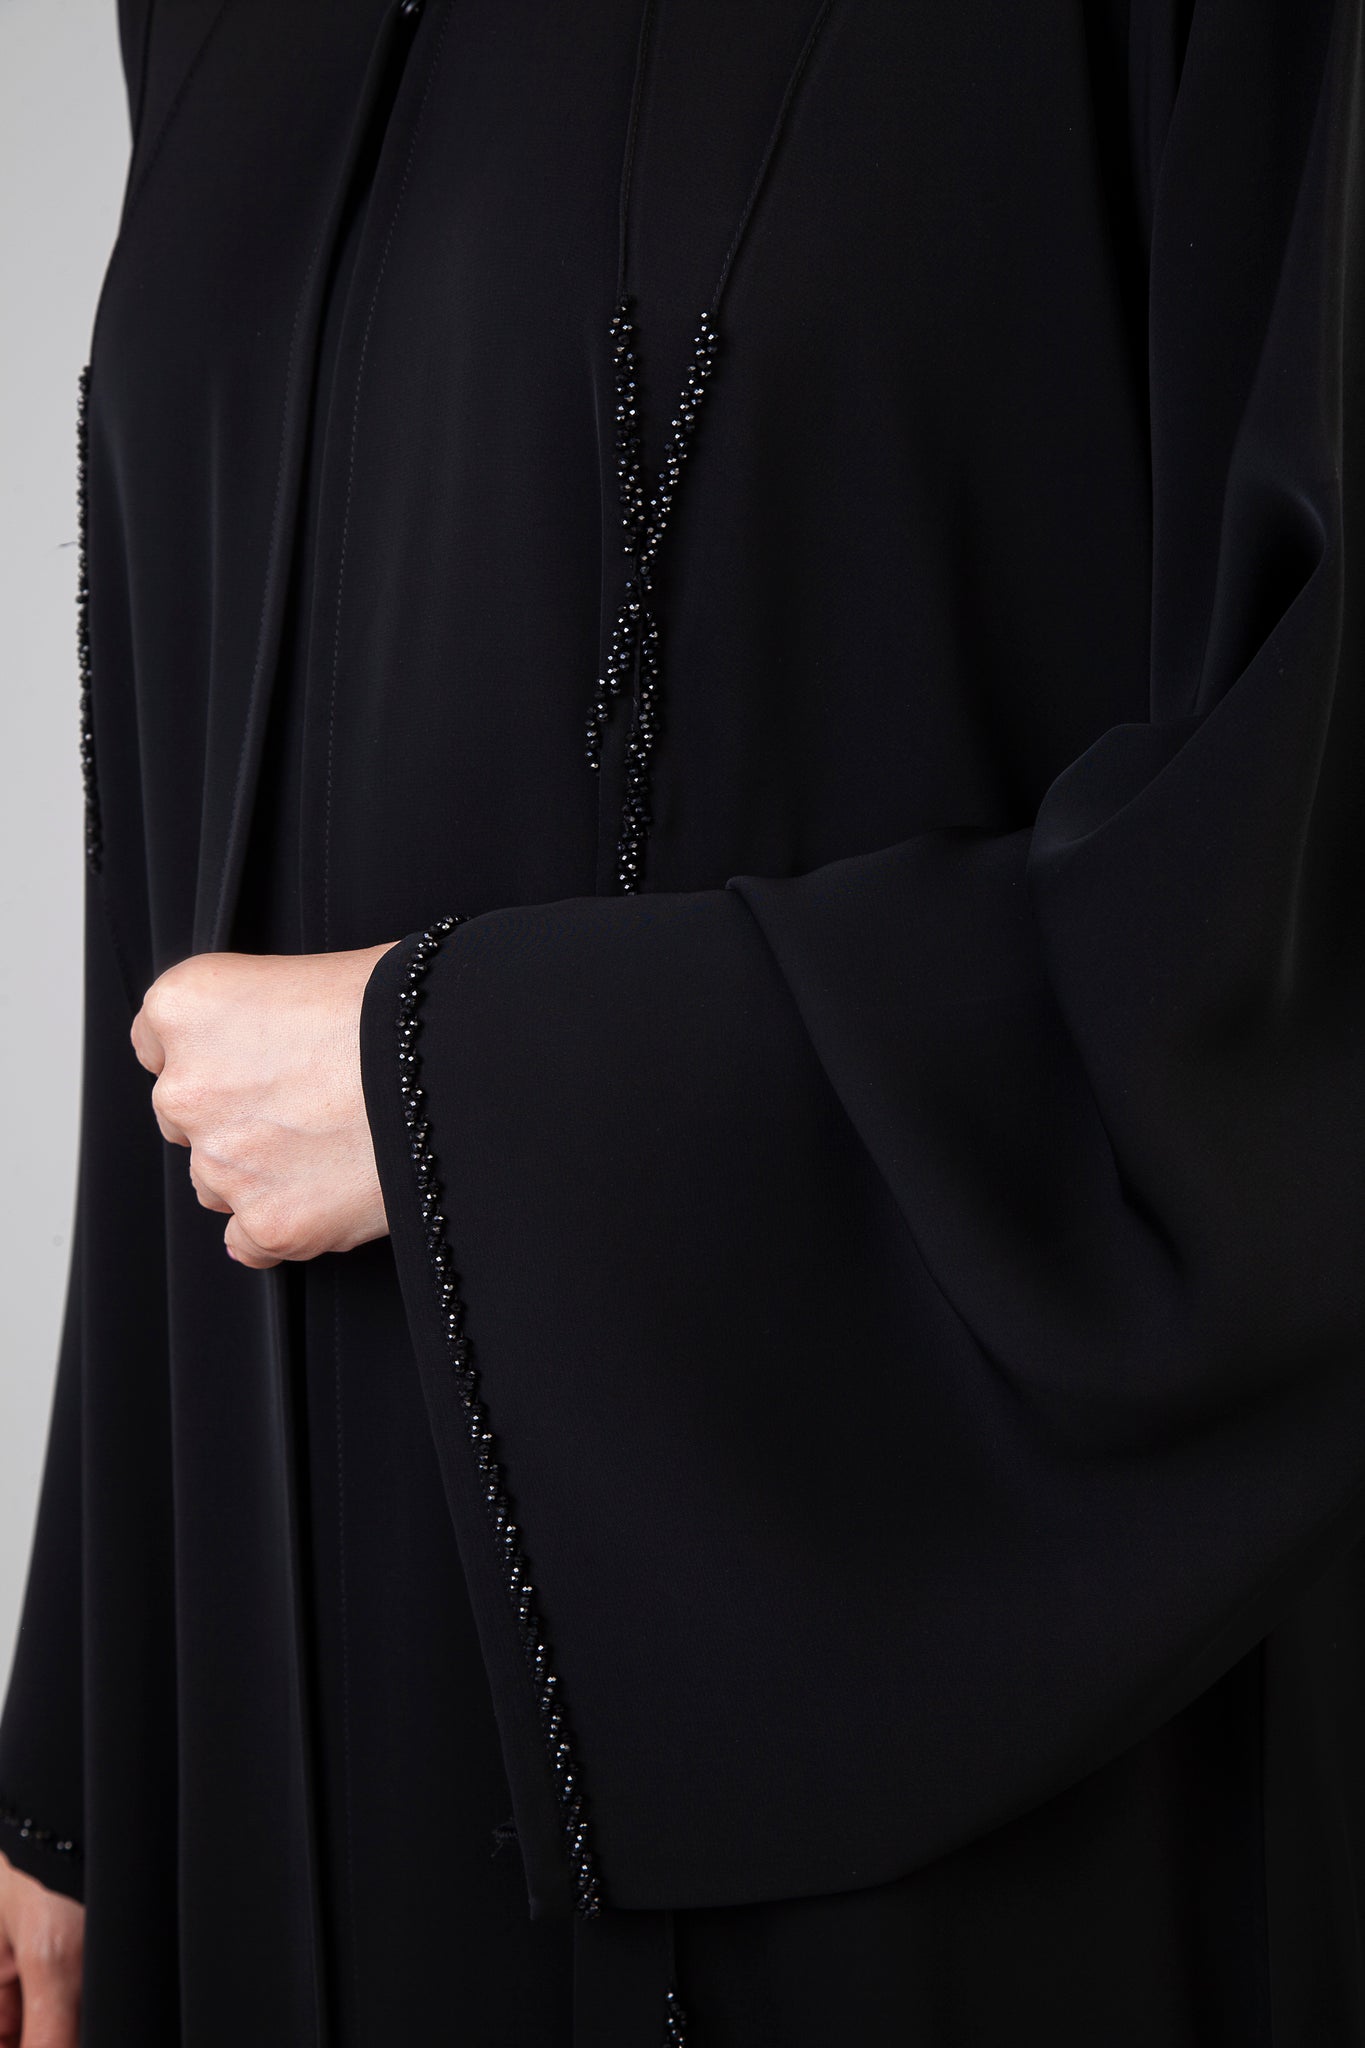 Classic Black Abaya Design